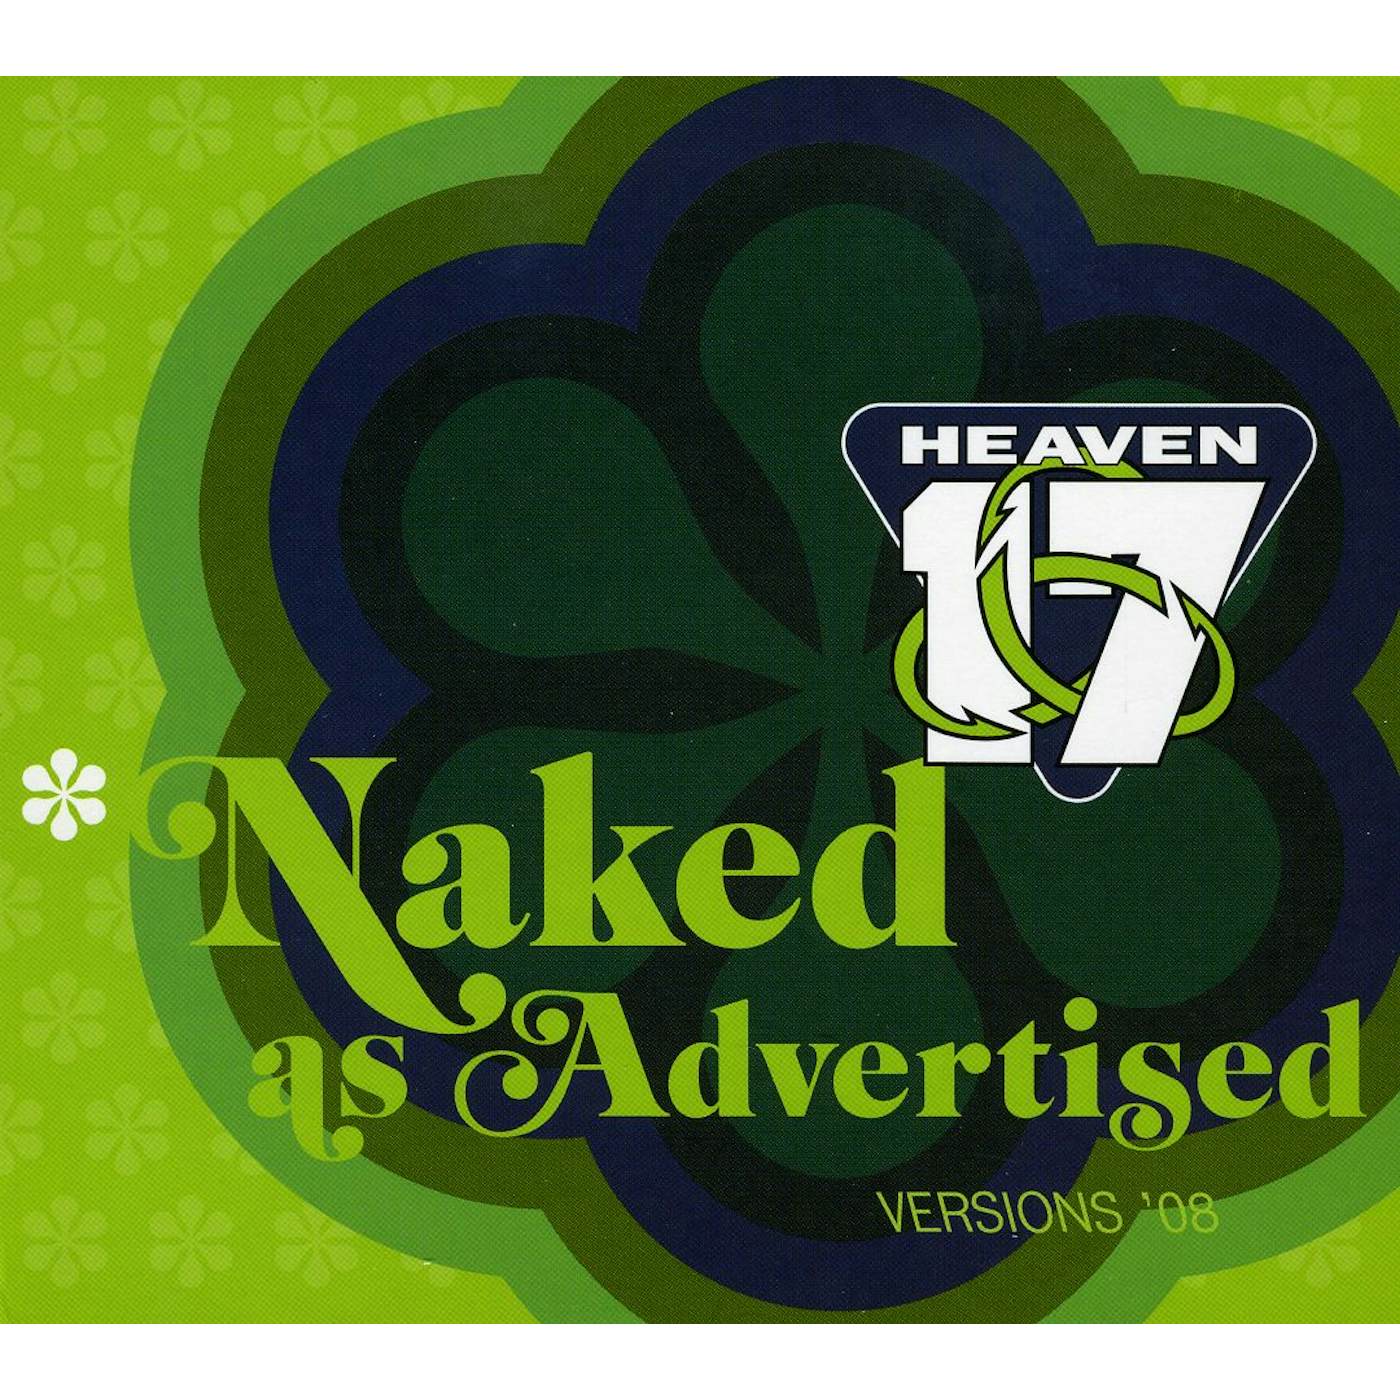 Heaven 17 NAKED AS ADVERTISED - VERSIONS 08 CD